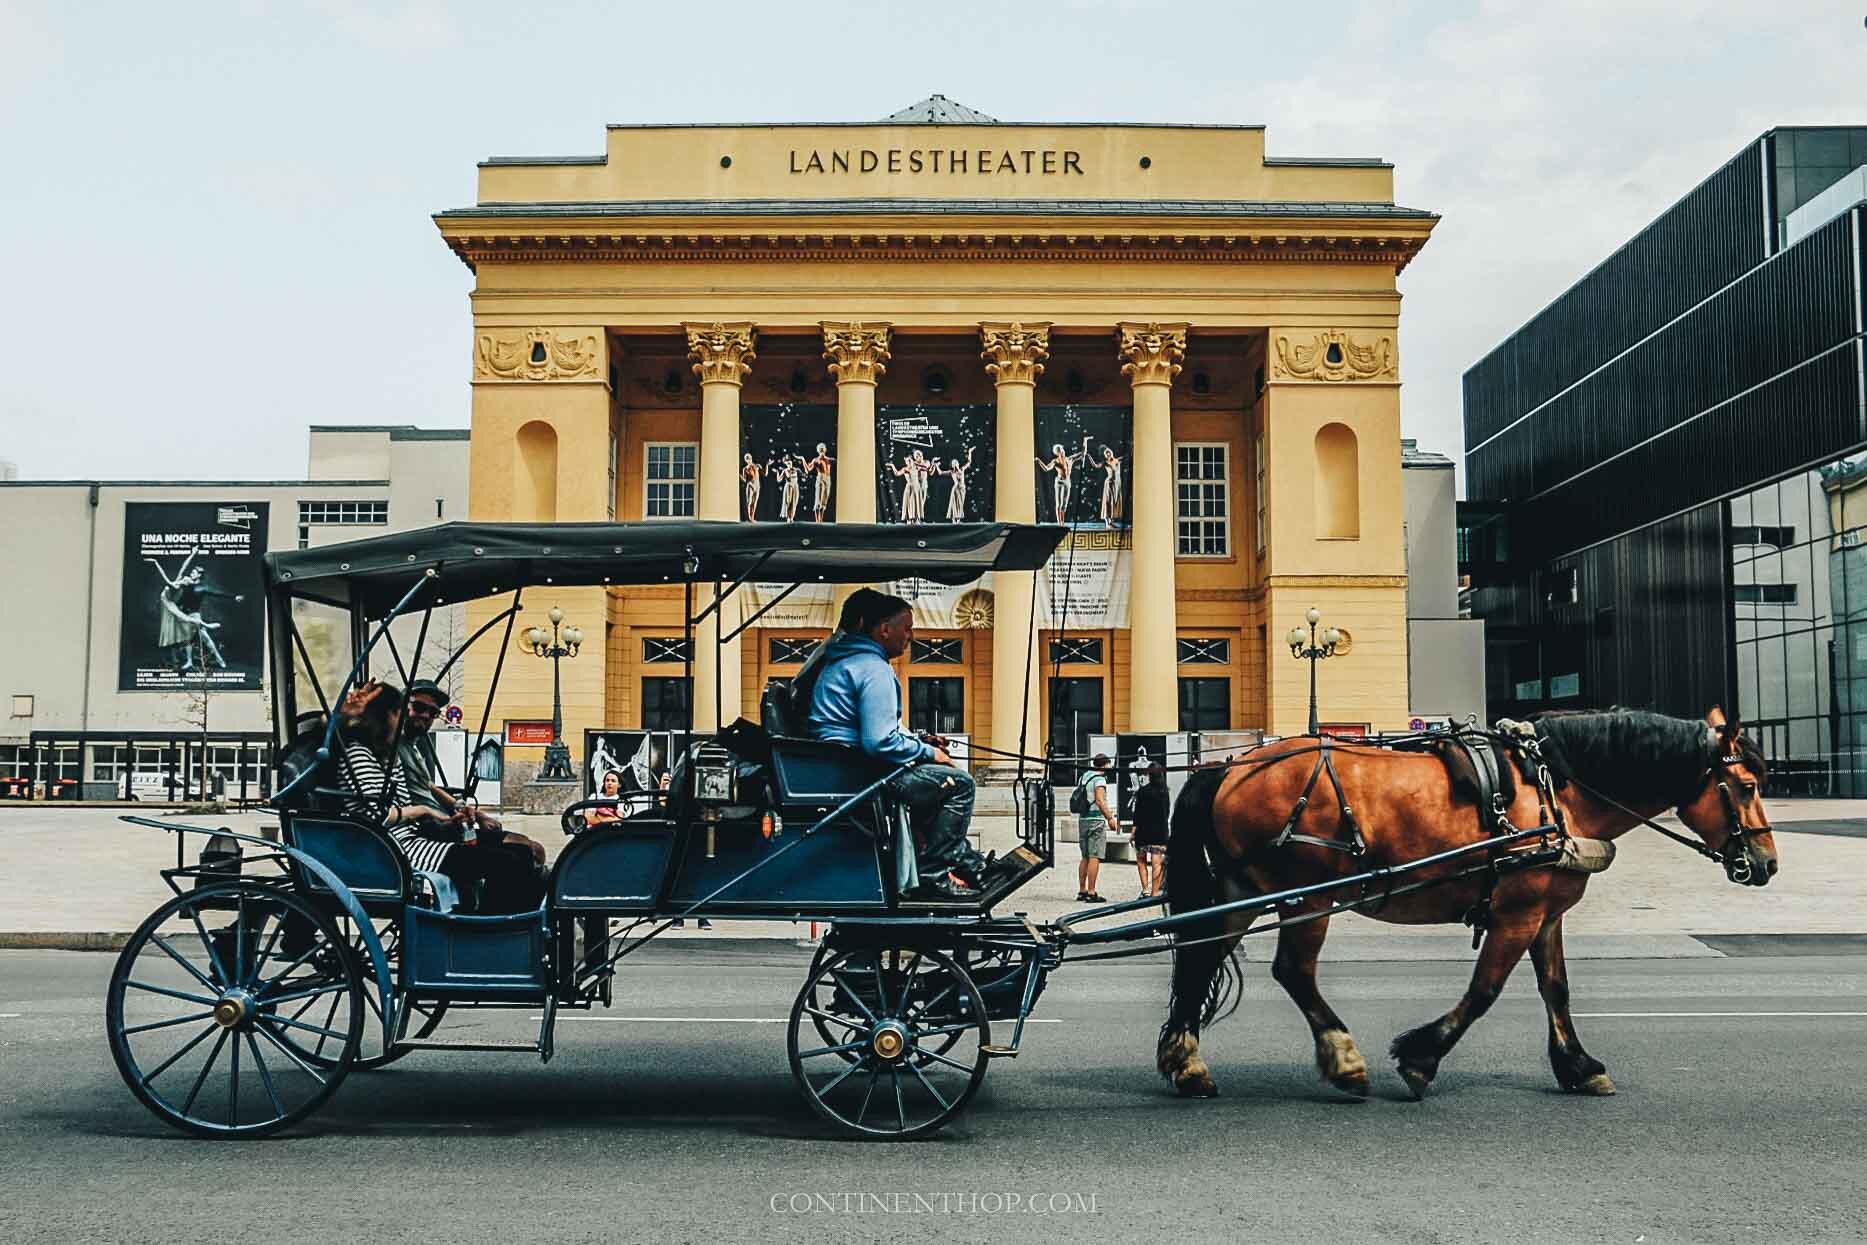 Landestheater in Innsbruck on your 2 days in Innsbruck on your Austria Itinerary